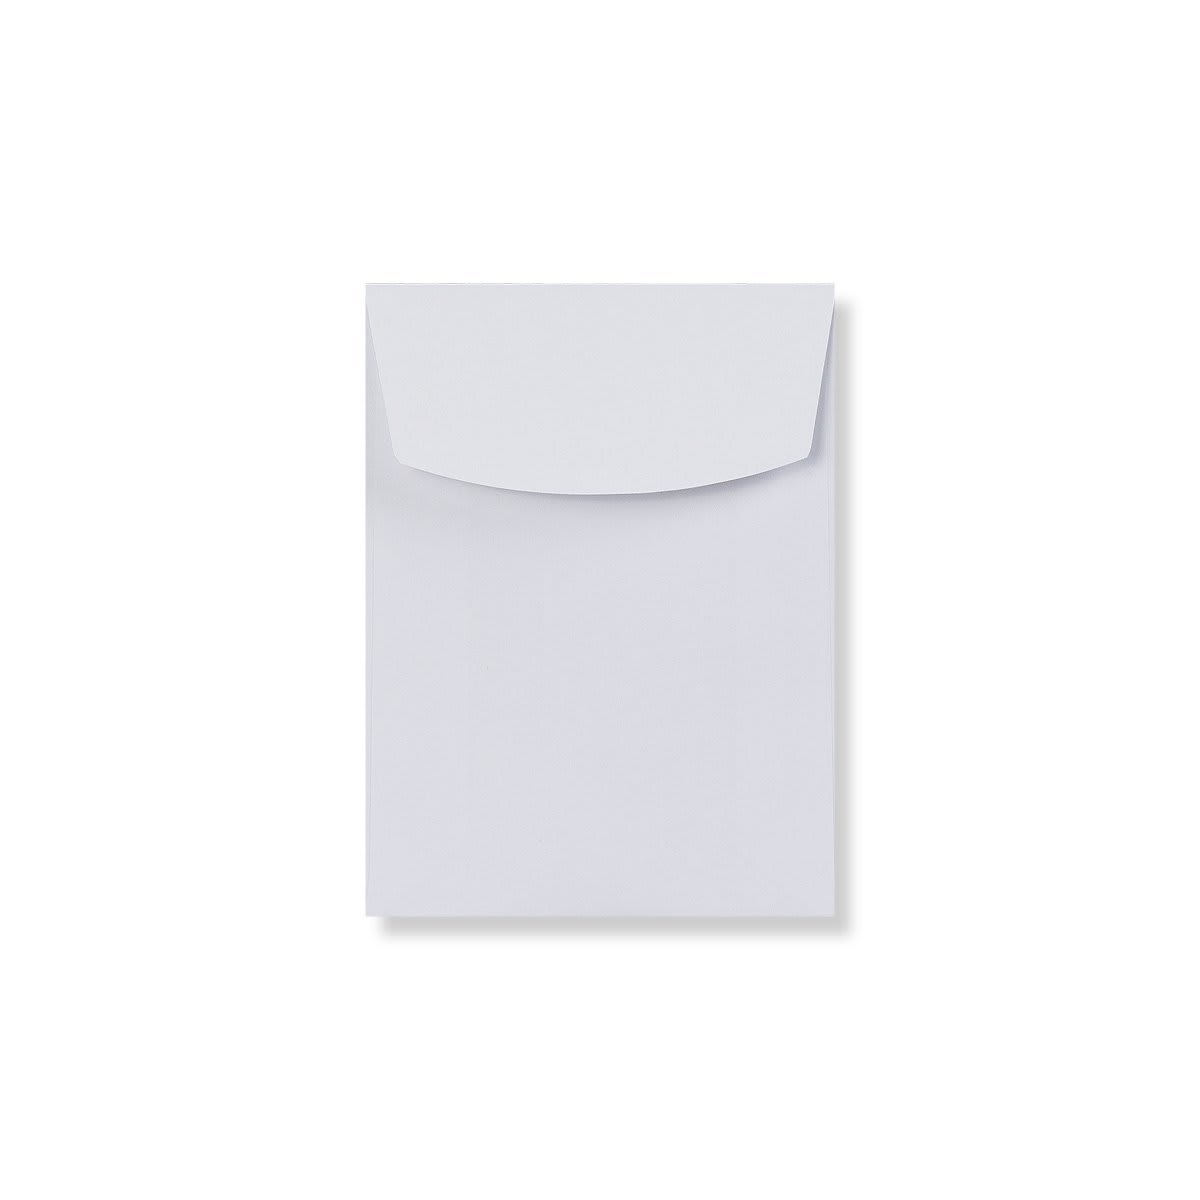 102x76mm White Pocket Gummed 80gsm Non-opaque Envelopes